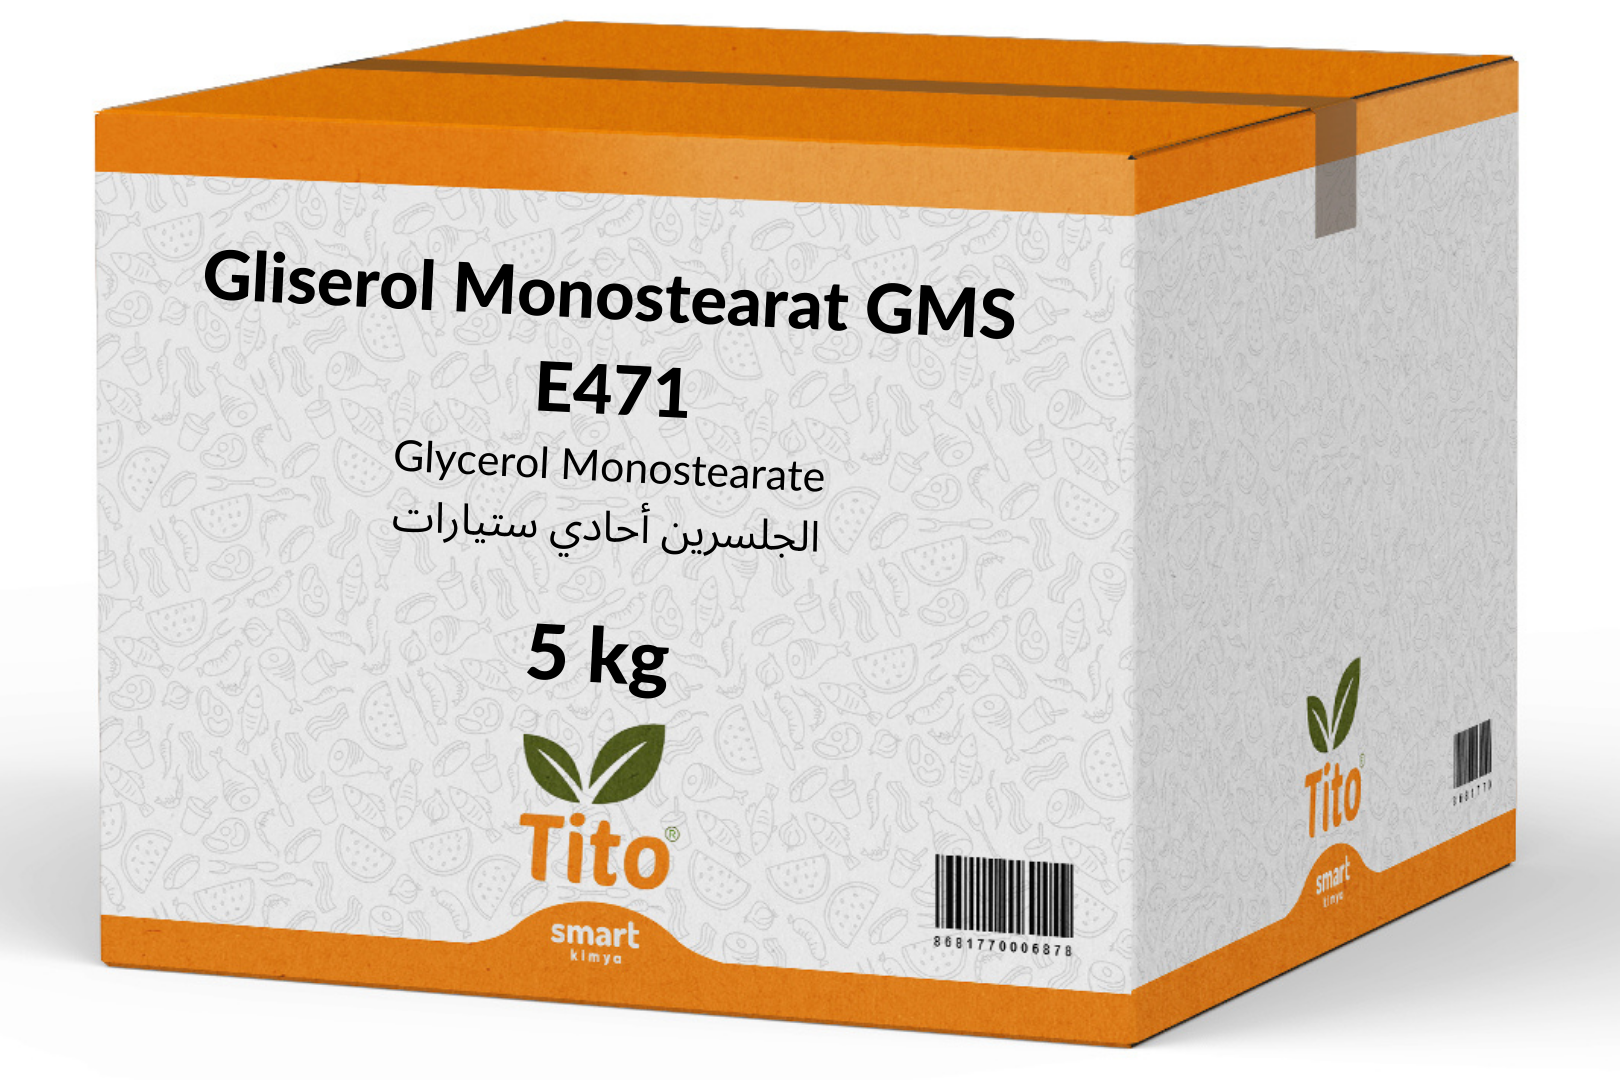 Gliserol Monostearat GMS E471 5 kg